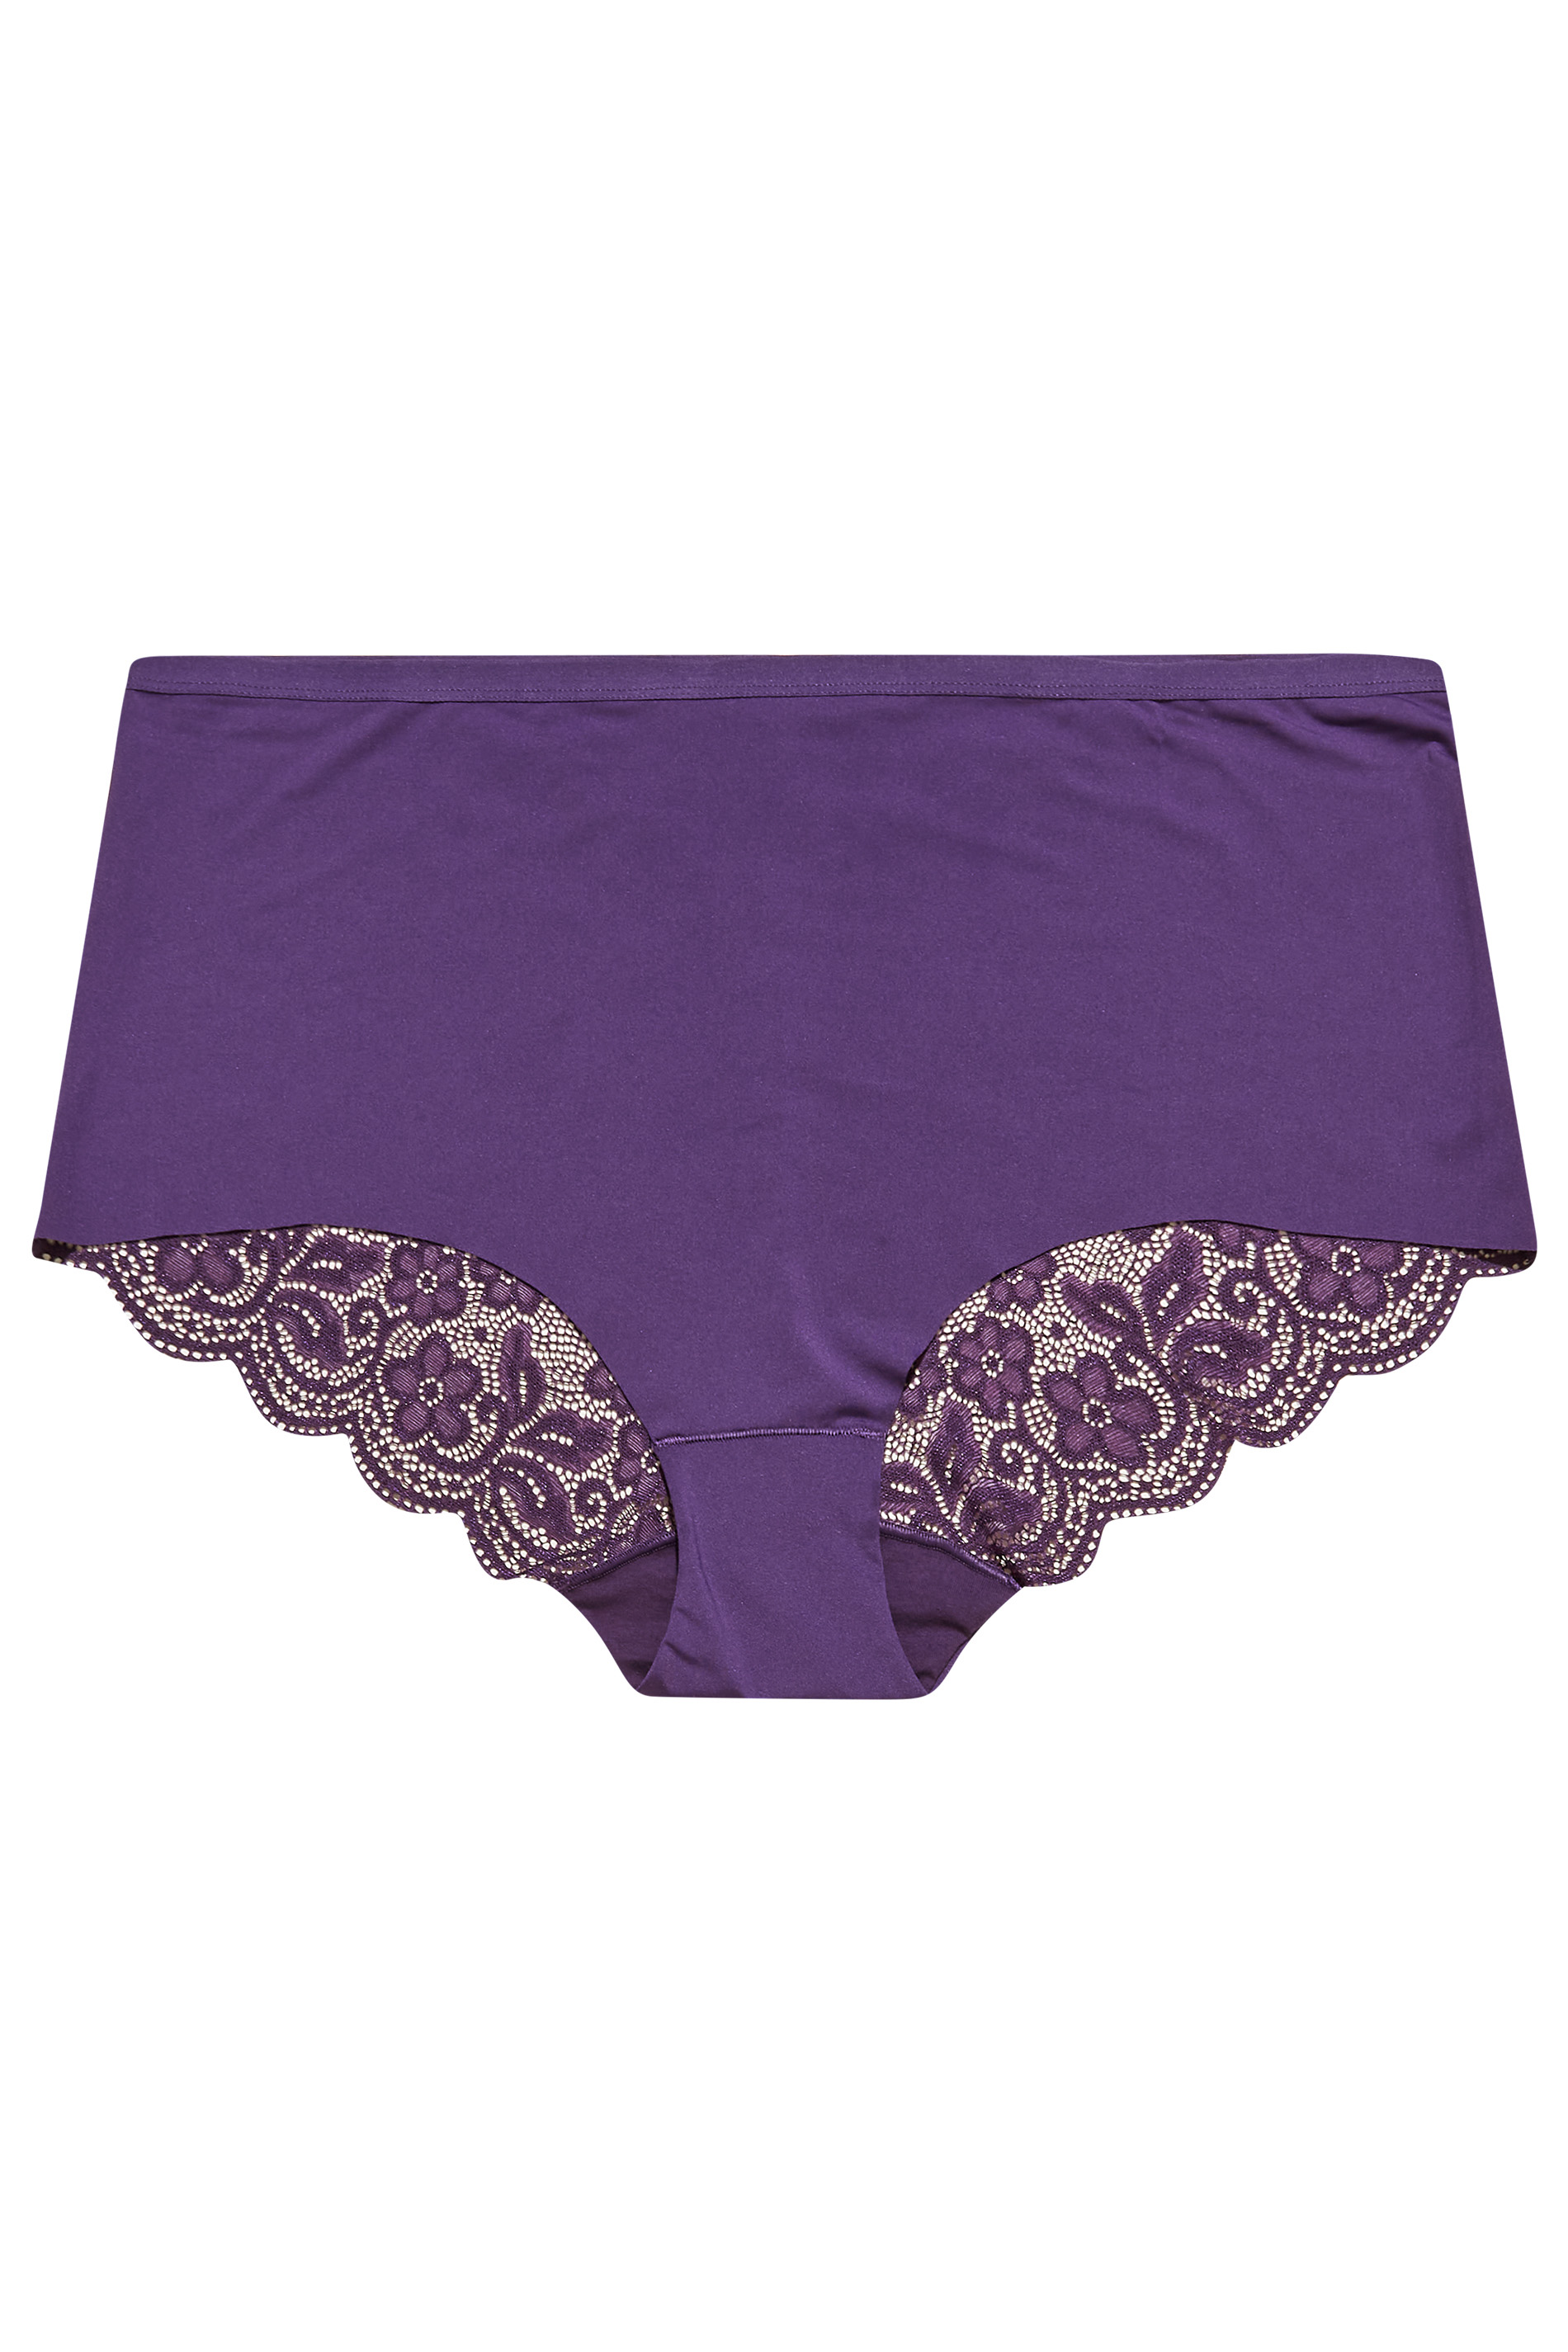 Plus Size Purple Lace High Waist Briefs | Yours Clothing 3